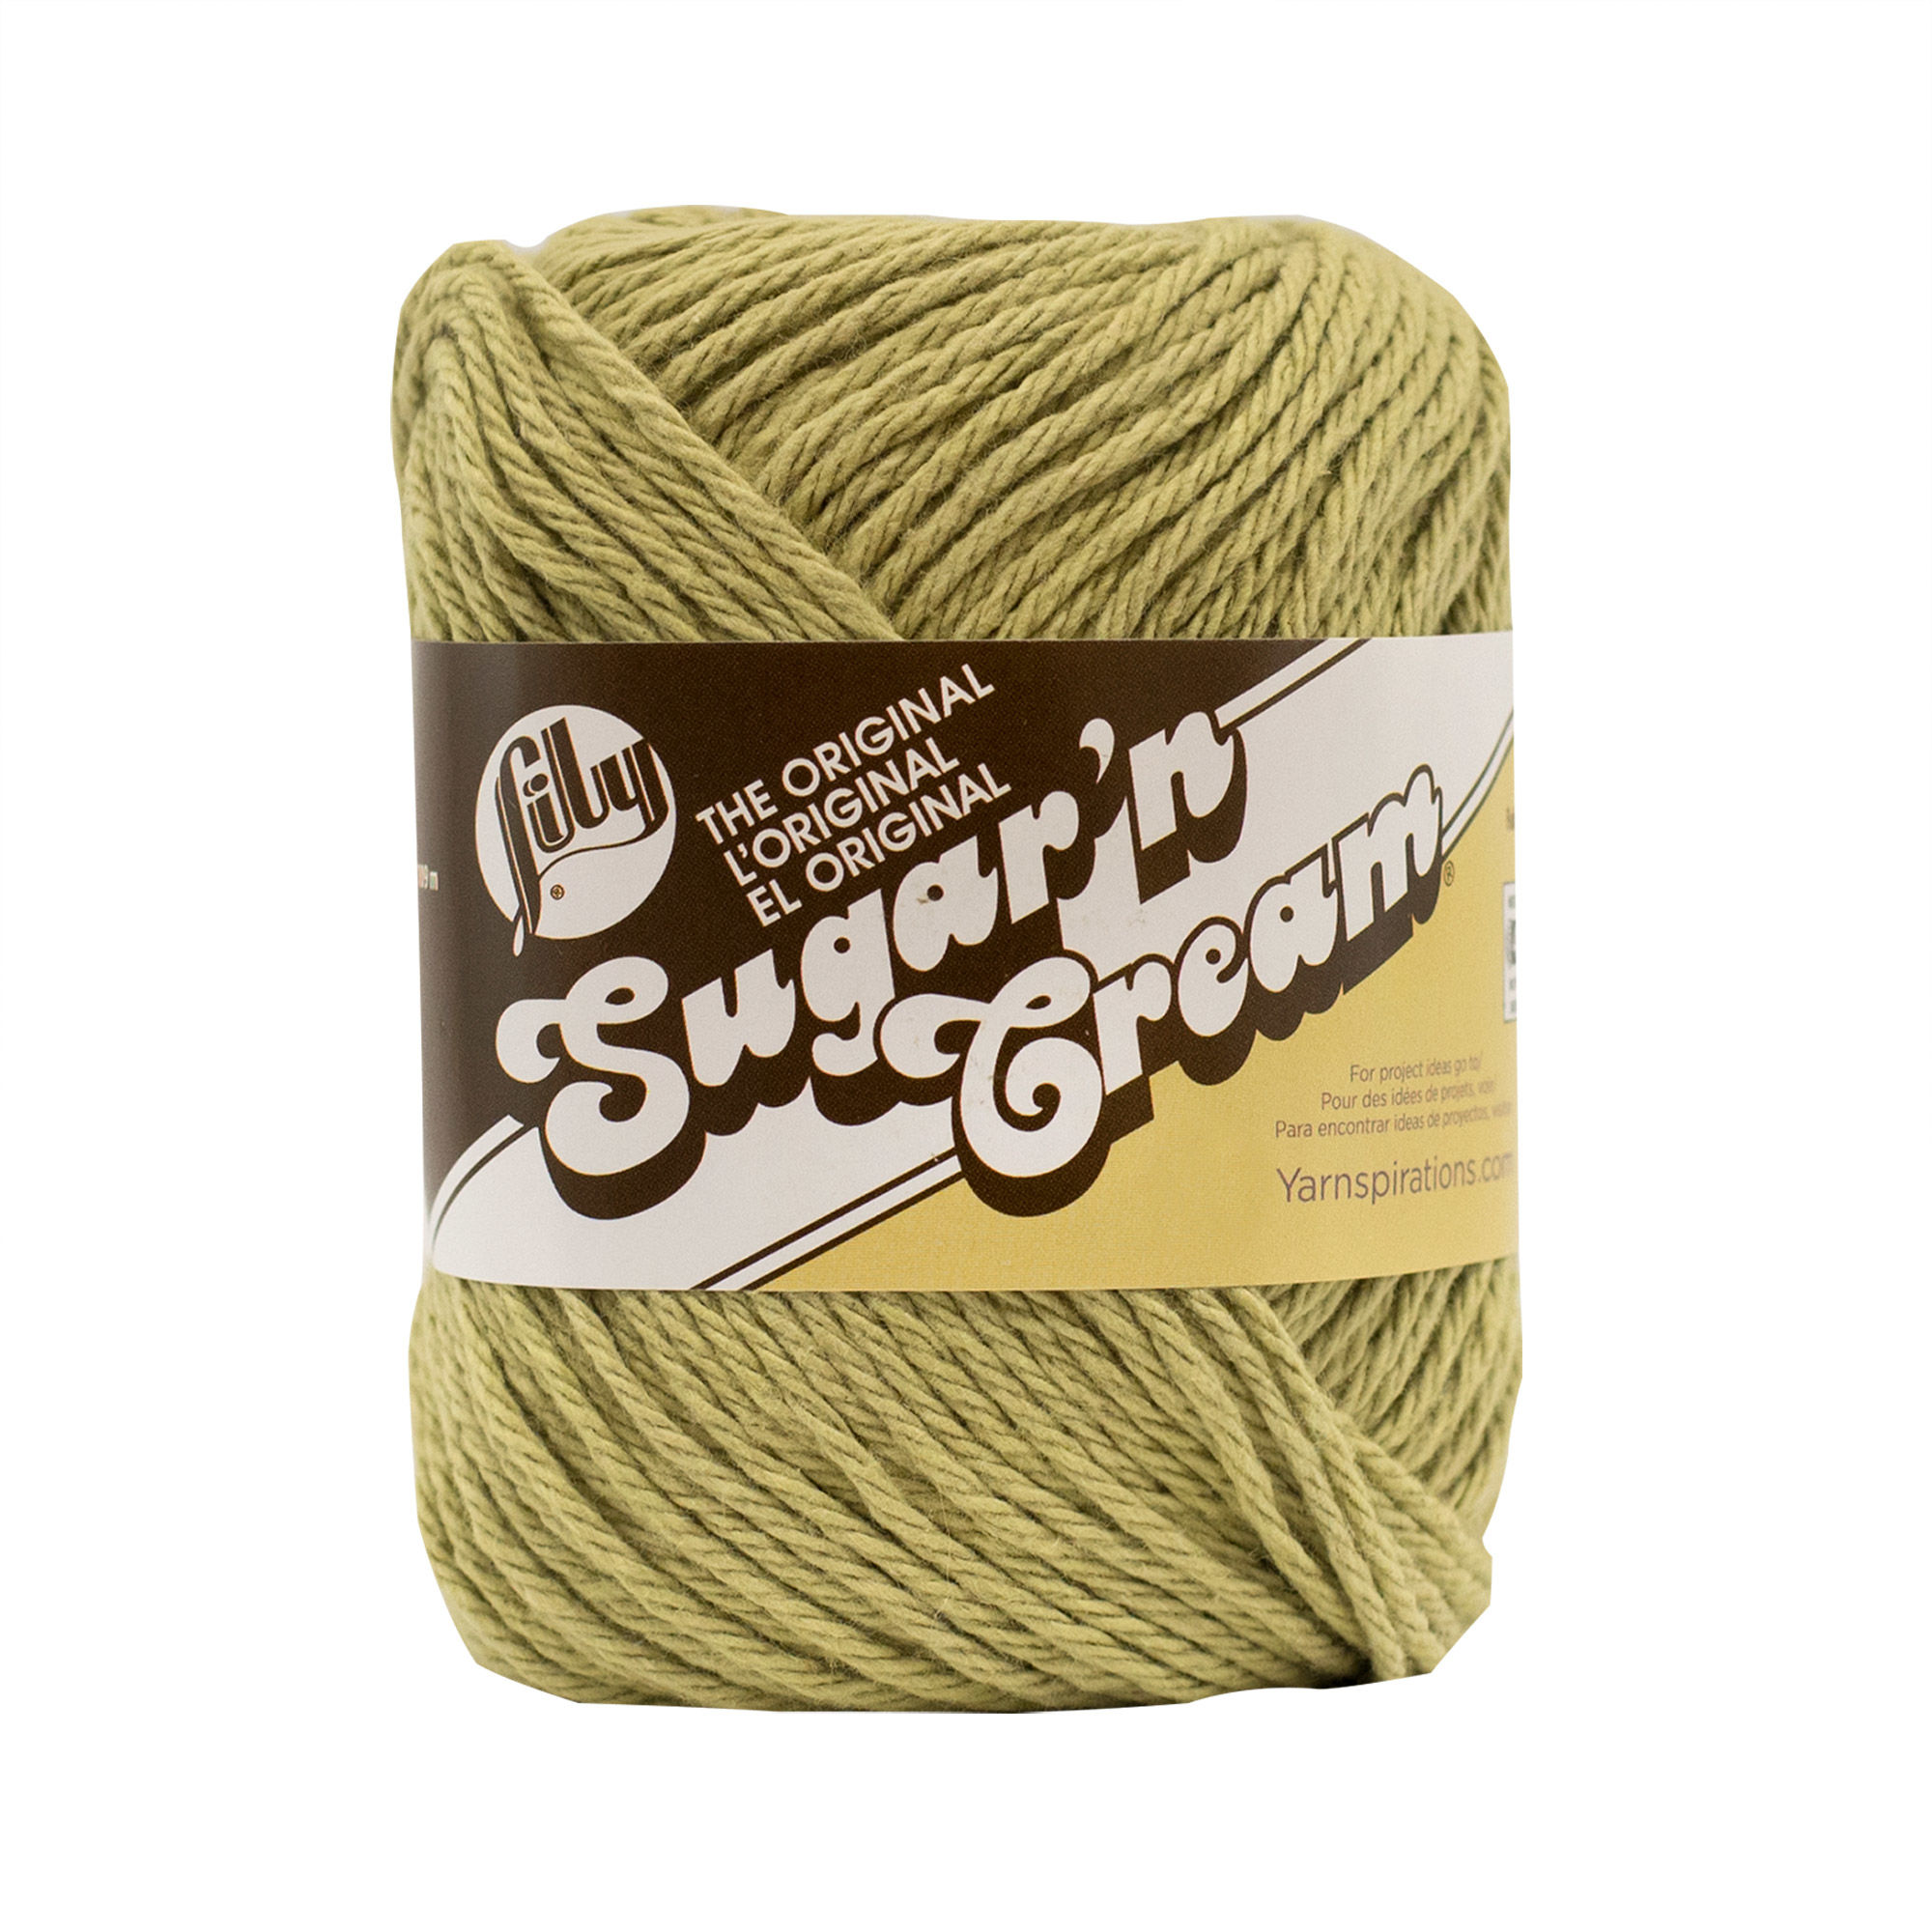 Lily Sugar?N Cream The Original Yarn, Country Green - image 1 of 2